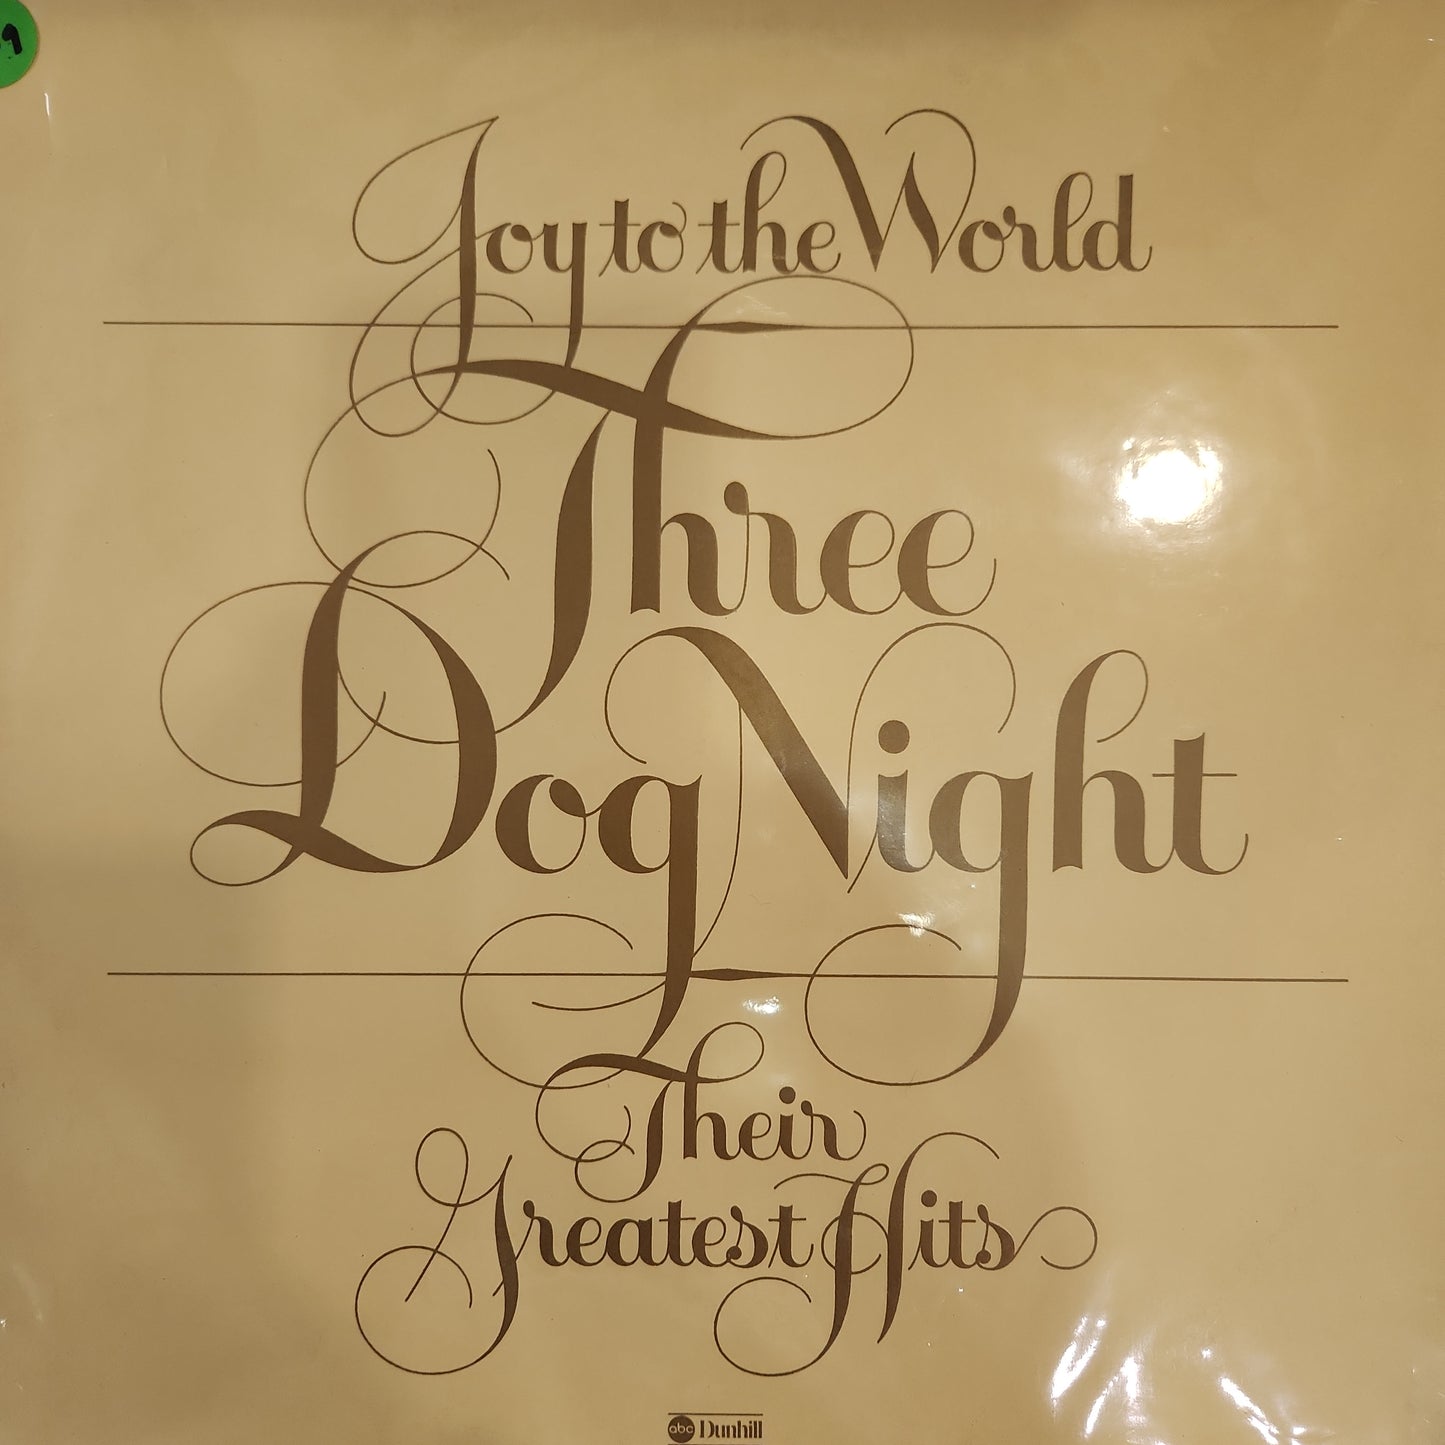 Three Dog Night - Greatest Hits